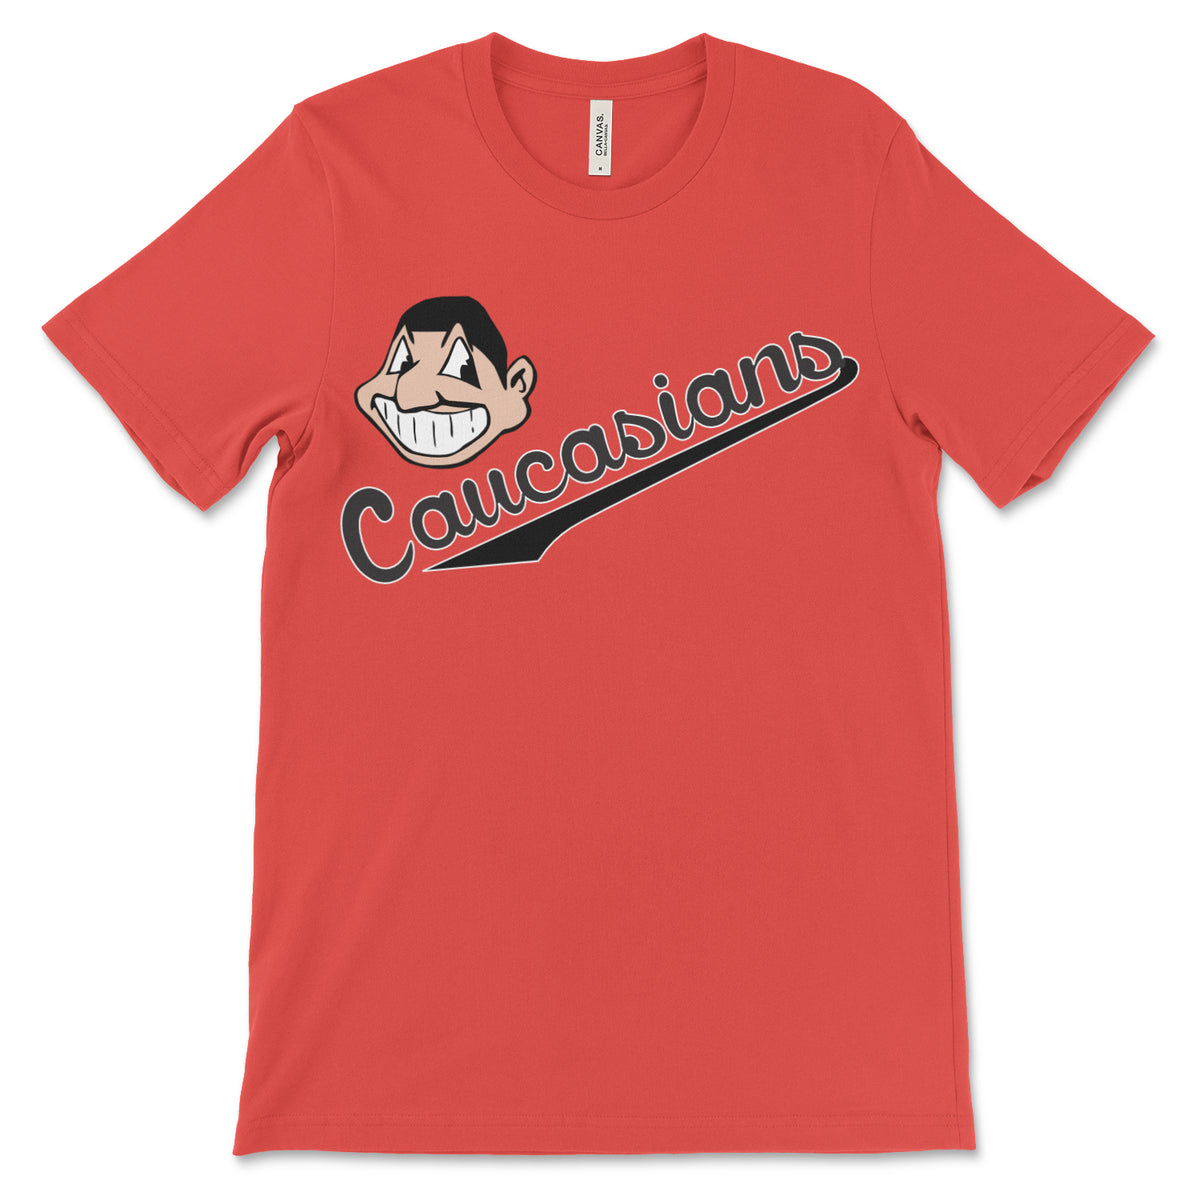 Caucasians Cleveland Indians Caucasian Dollar Man T-Shirt - Ink In